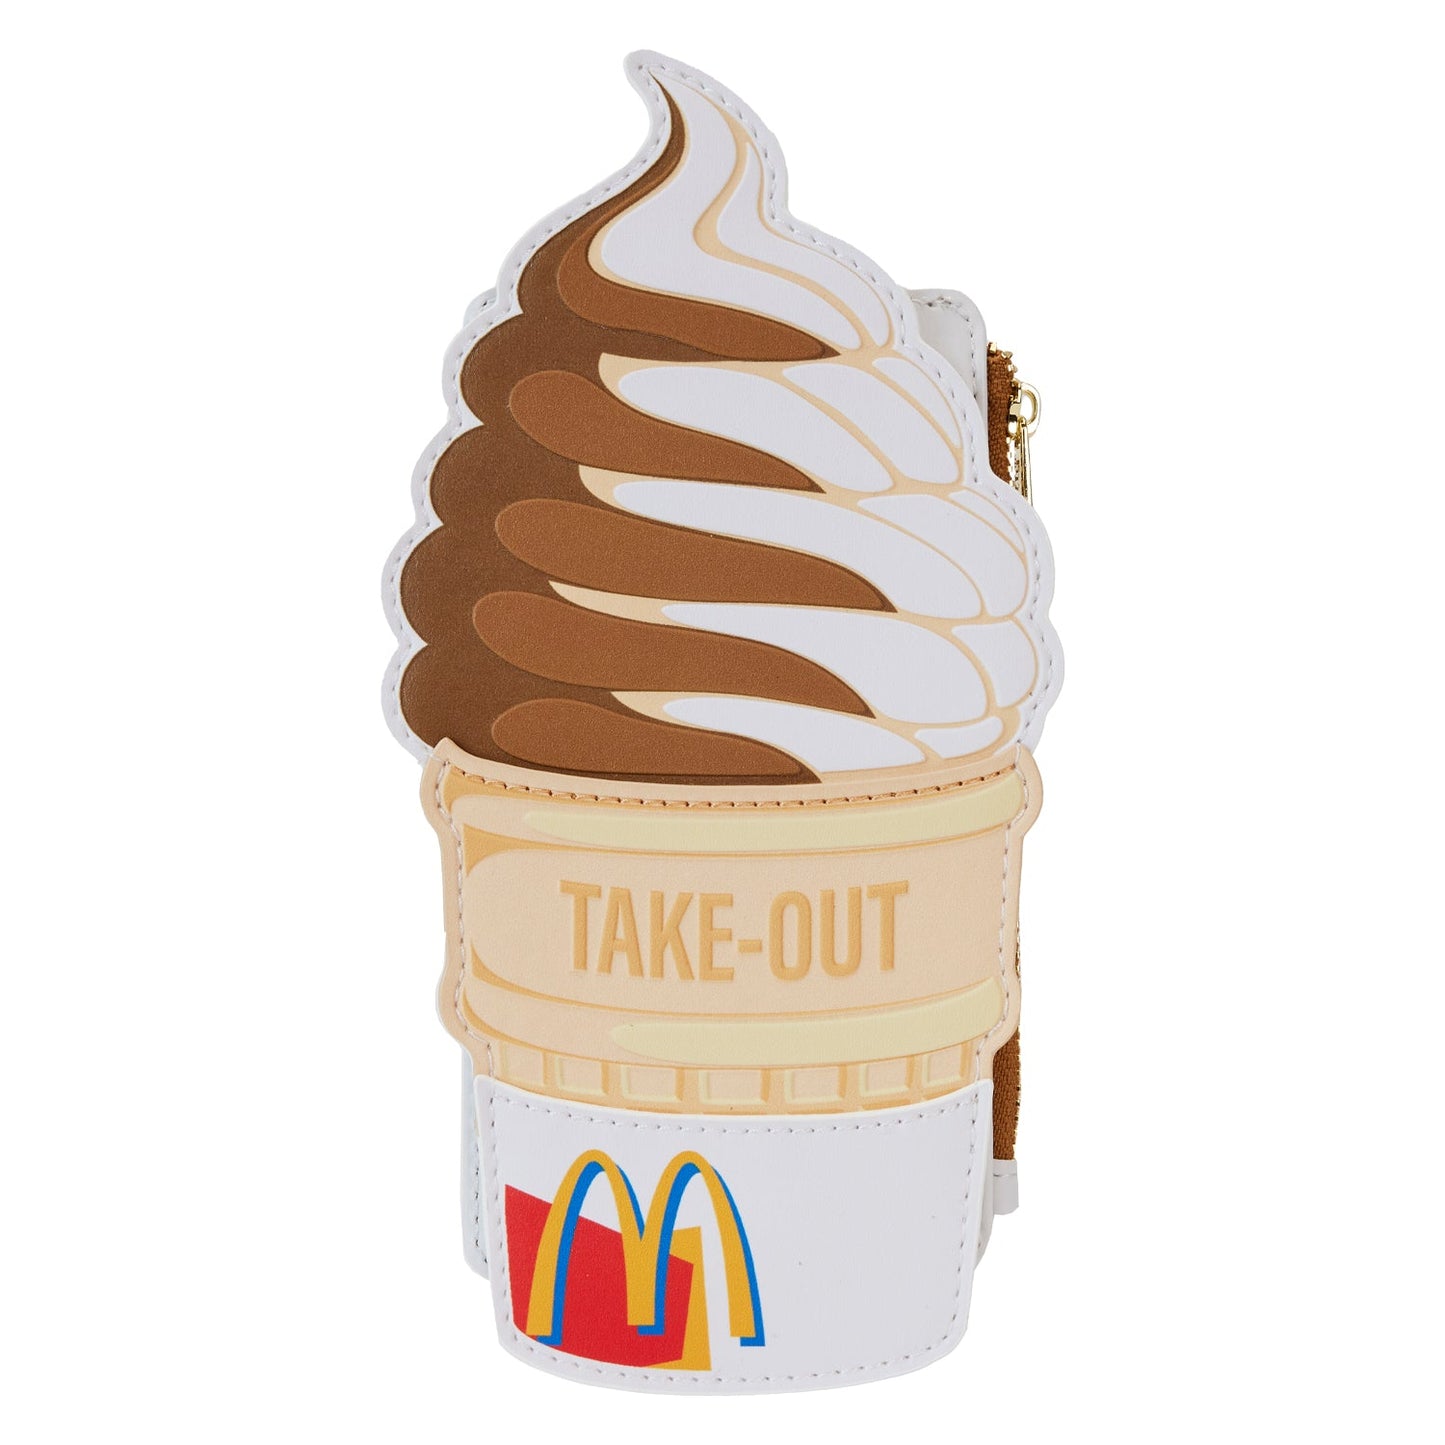 Loungefly McDonald's Soft Serve Ice Cream Cone Card Holder *PRE-ORDER ITEM*